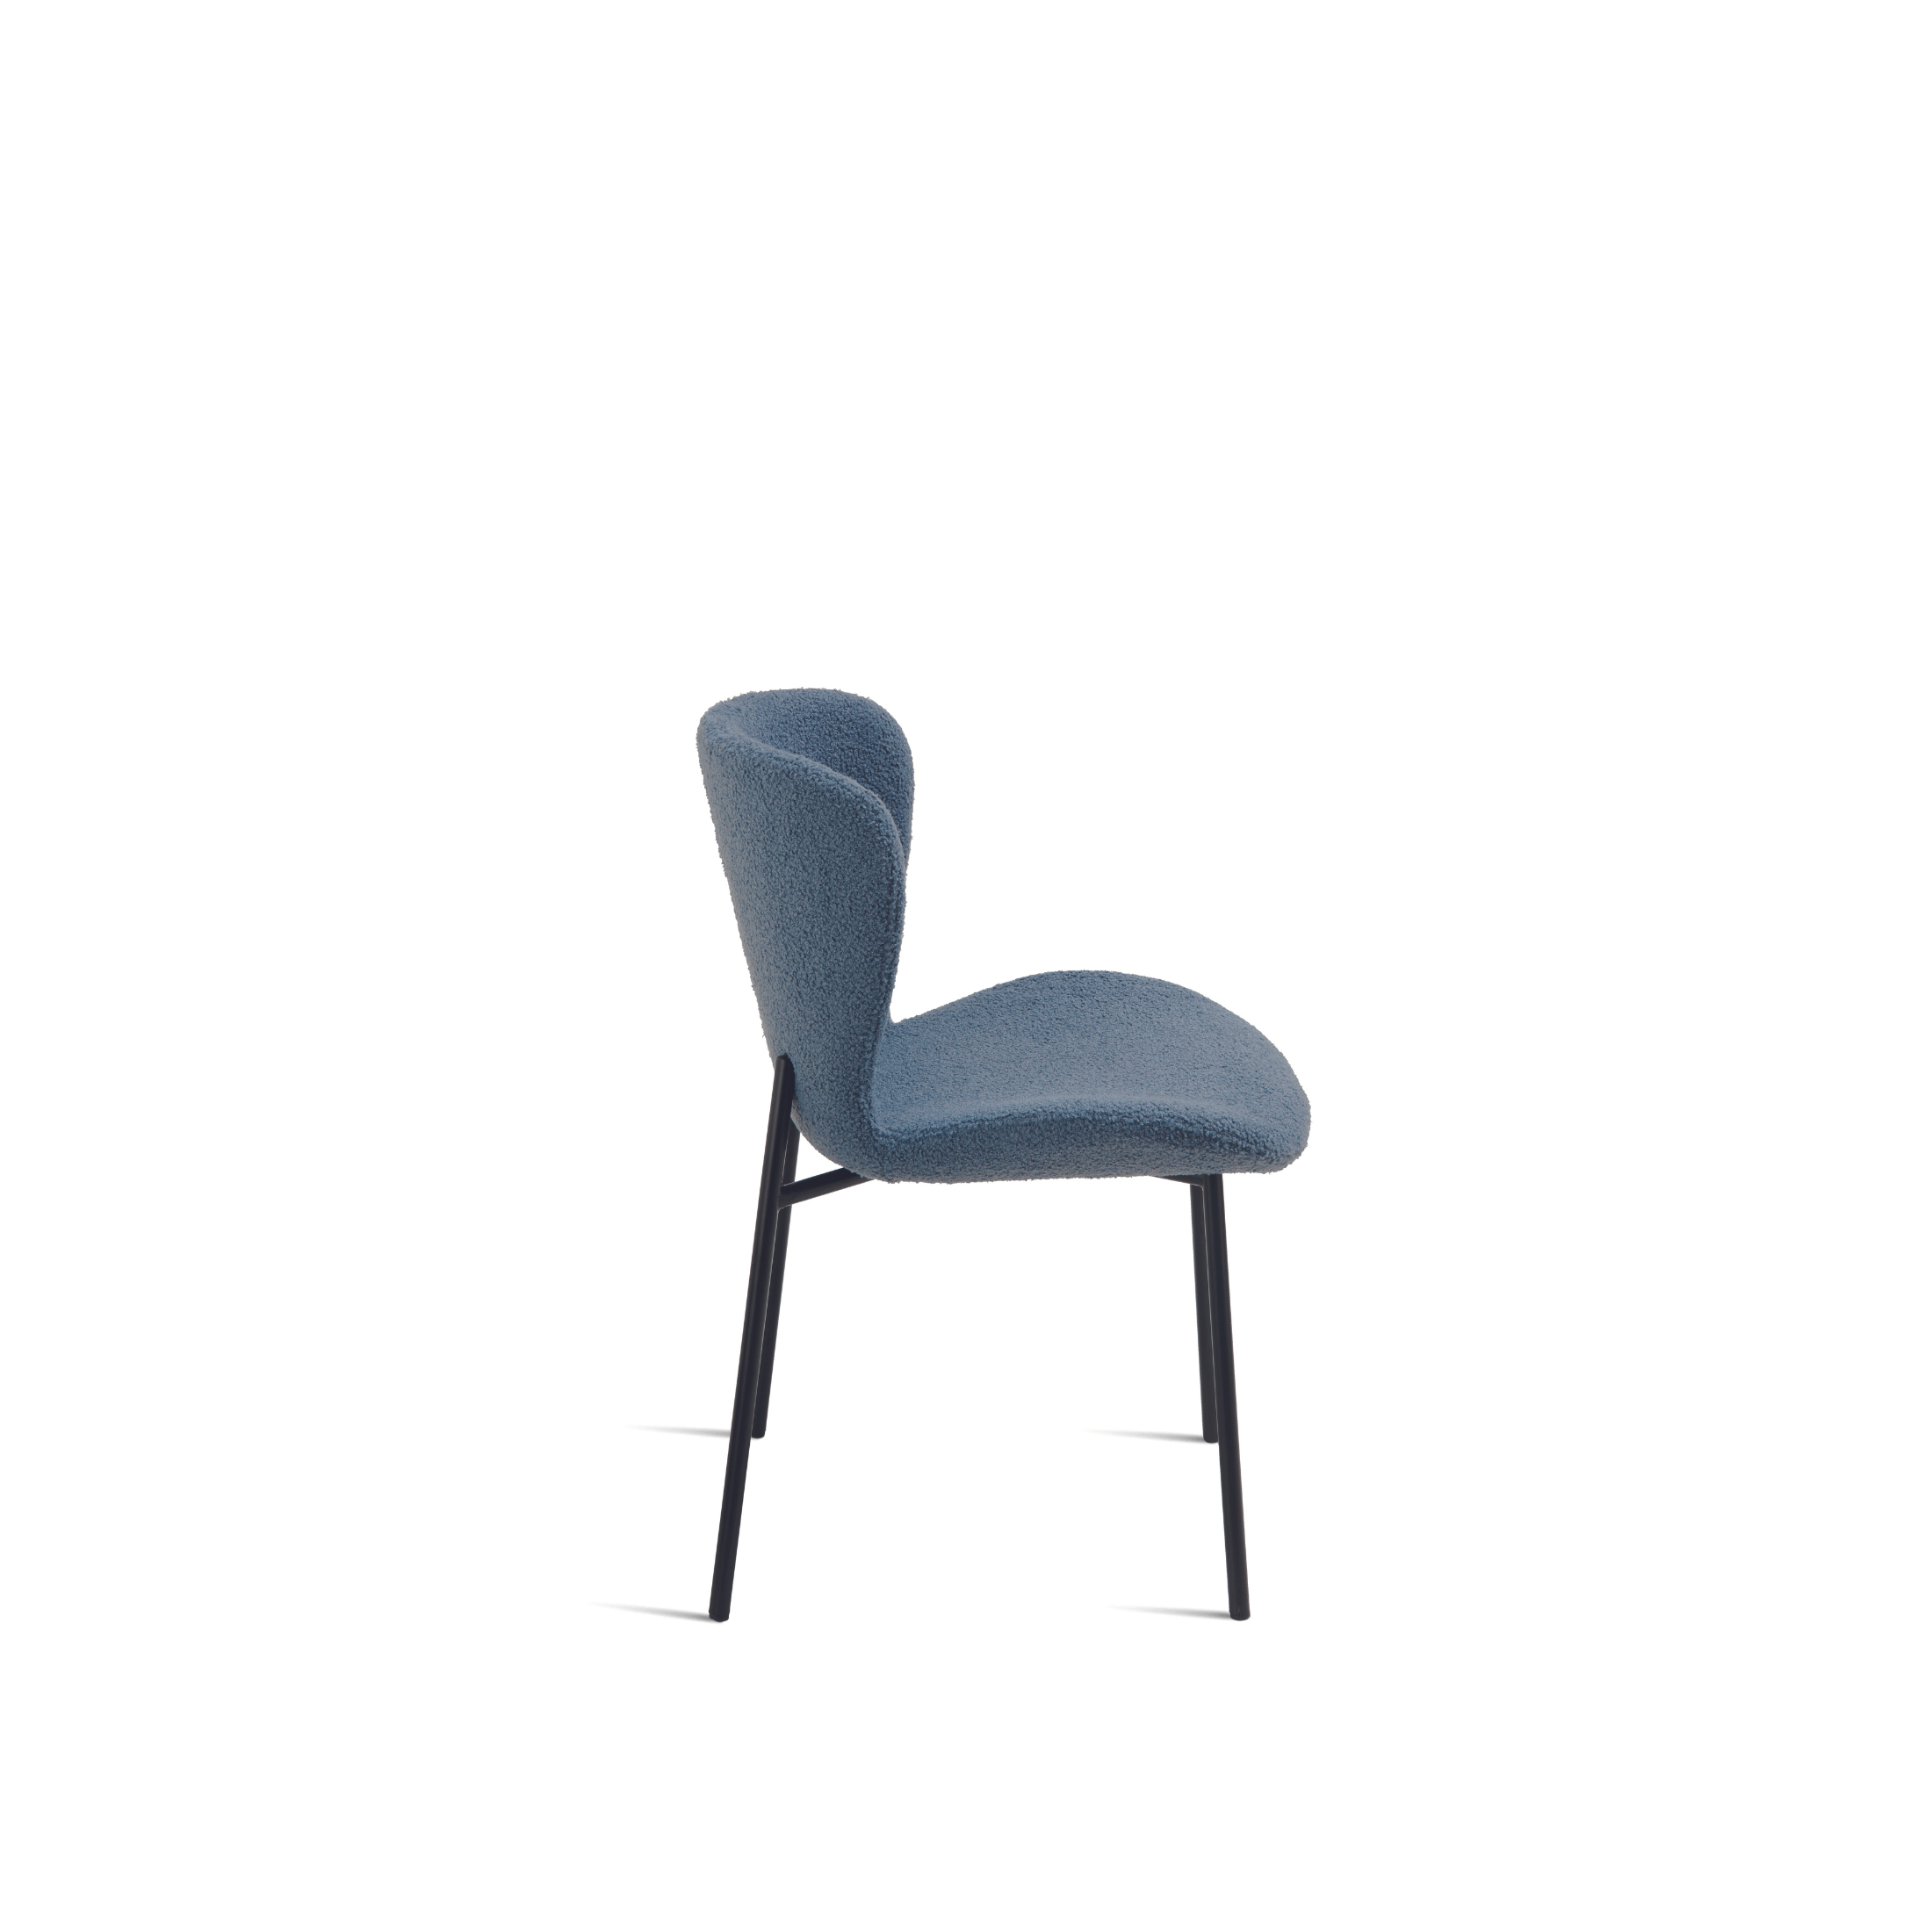 Set 4 pz sedie moderne imbottite "Abram" in tessuto bouclé écru da soggiorno